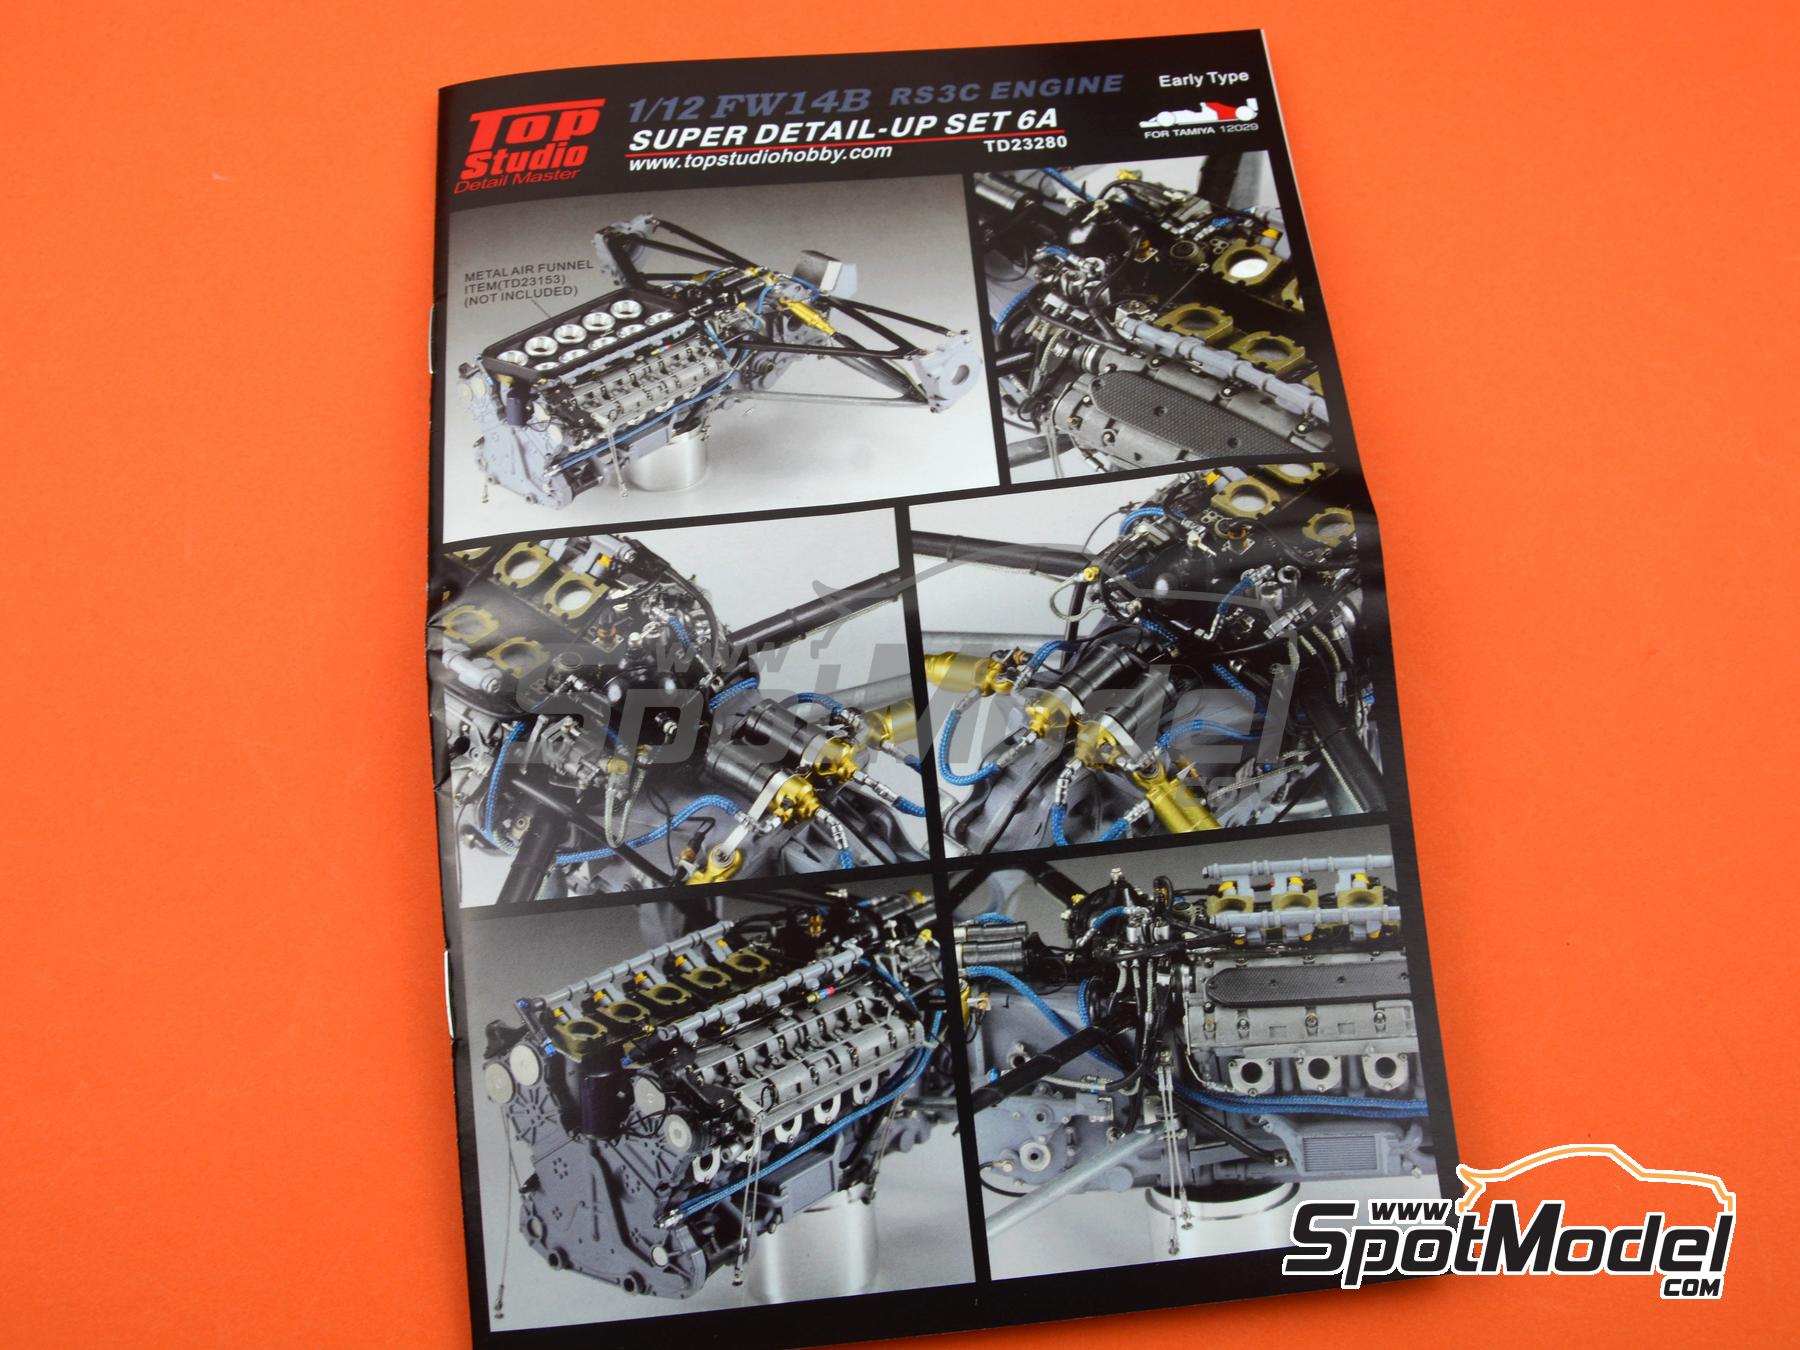 Top Studio 1/12 Williams FW14B Super Detail-up Set Vol.2 for Tamiya kit #12029 